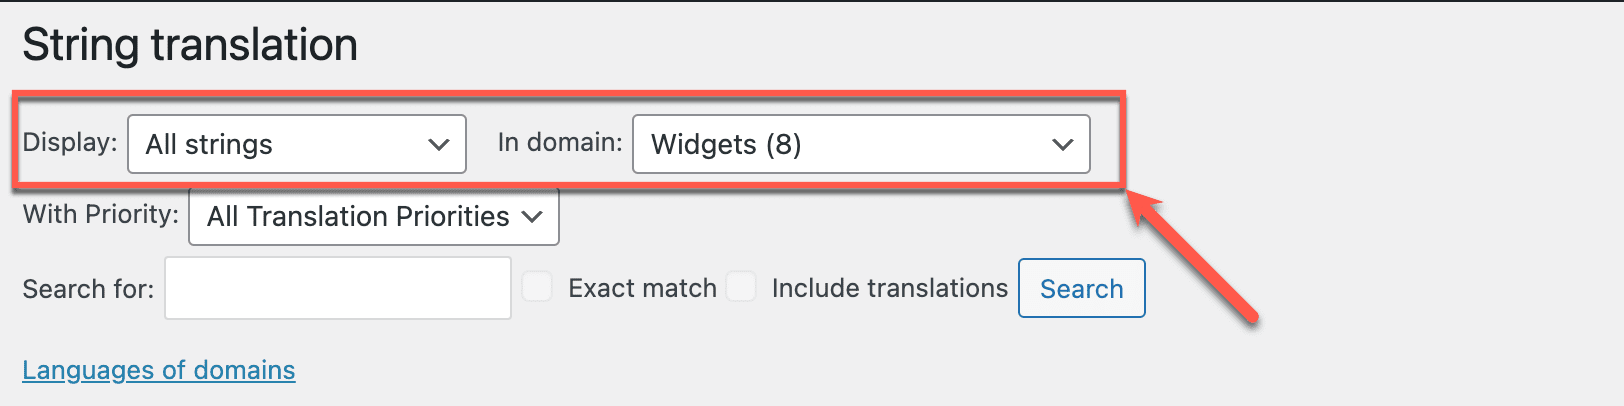 wpml string translation in domain widgets